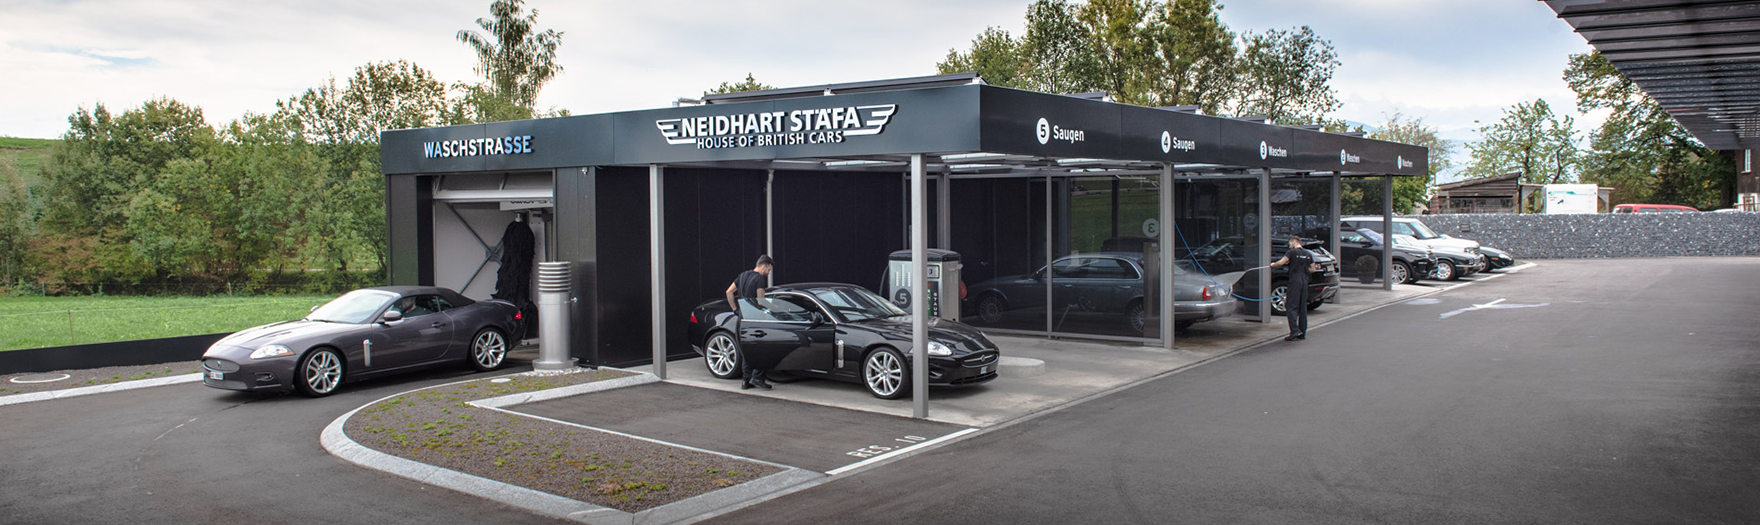 Neidhart Stäfa AG - House of British Cars, seit 1978 in Stäfa am Zürichsee - Jaguar, Bentley, Rolls Royce, Land-Rover, Range-Rover